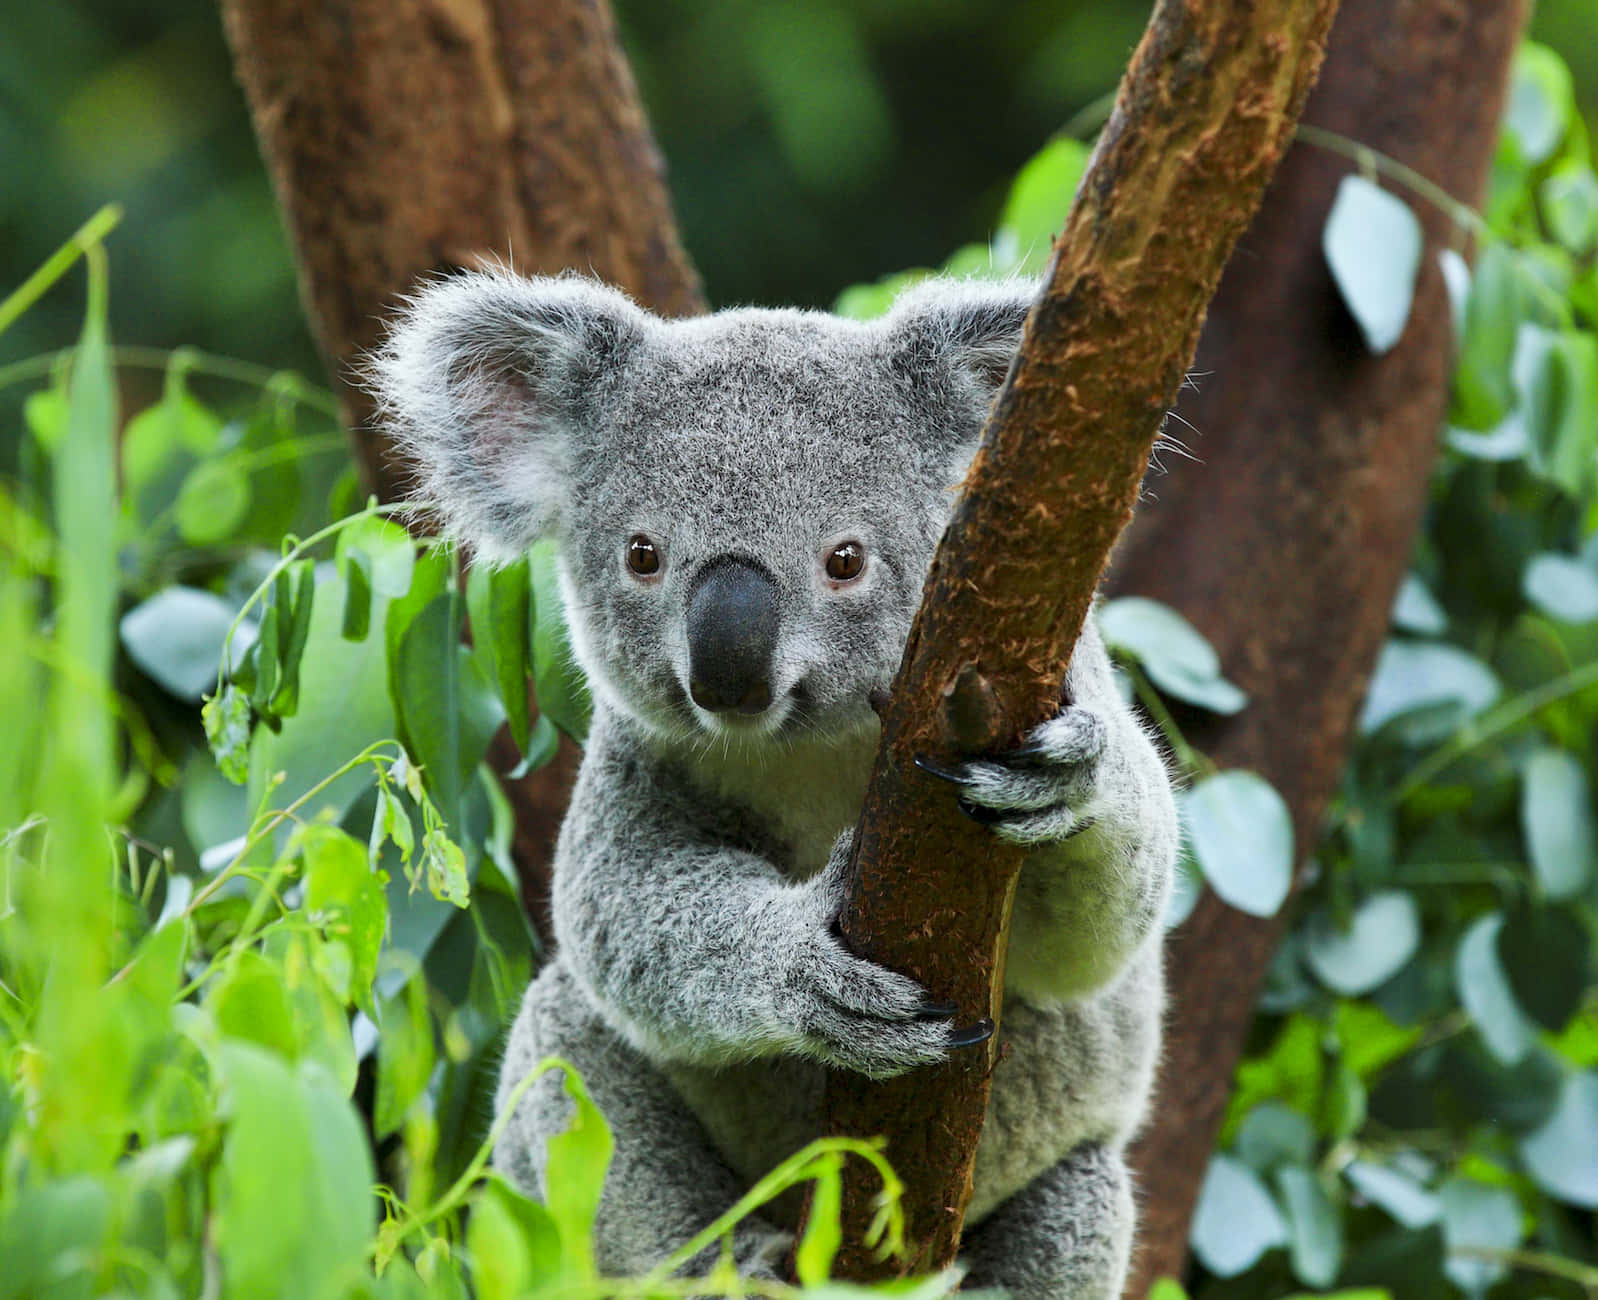 A Koala Bear Sitting and Looking Adorably